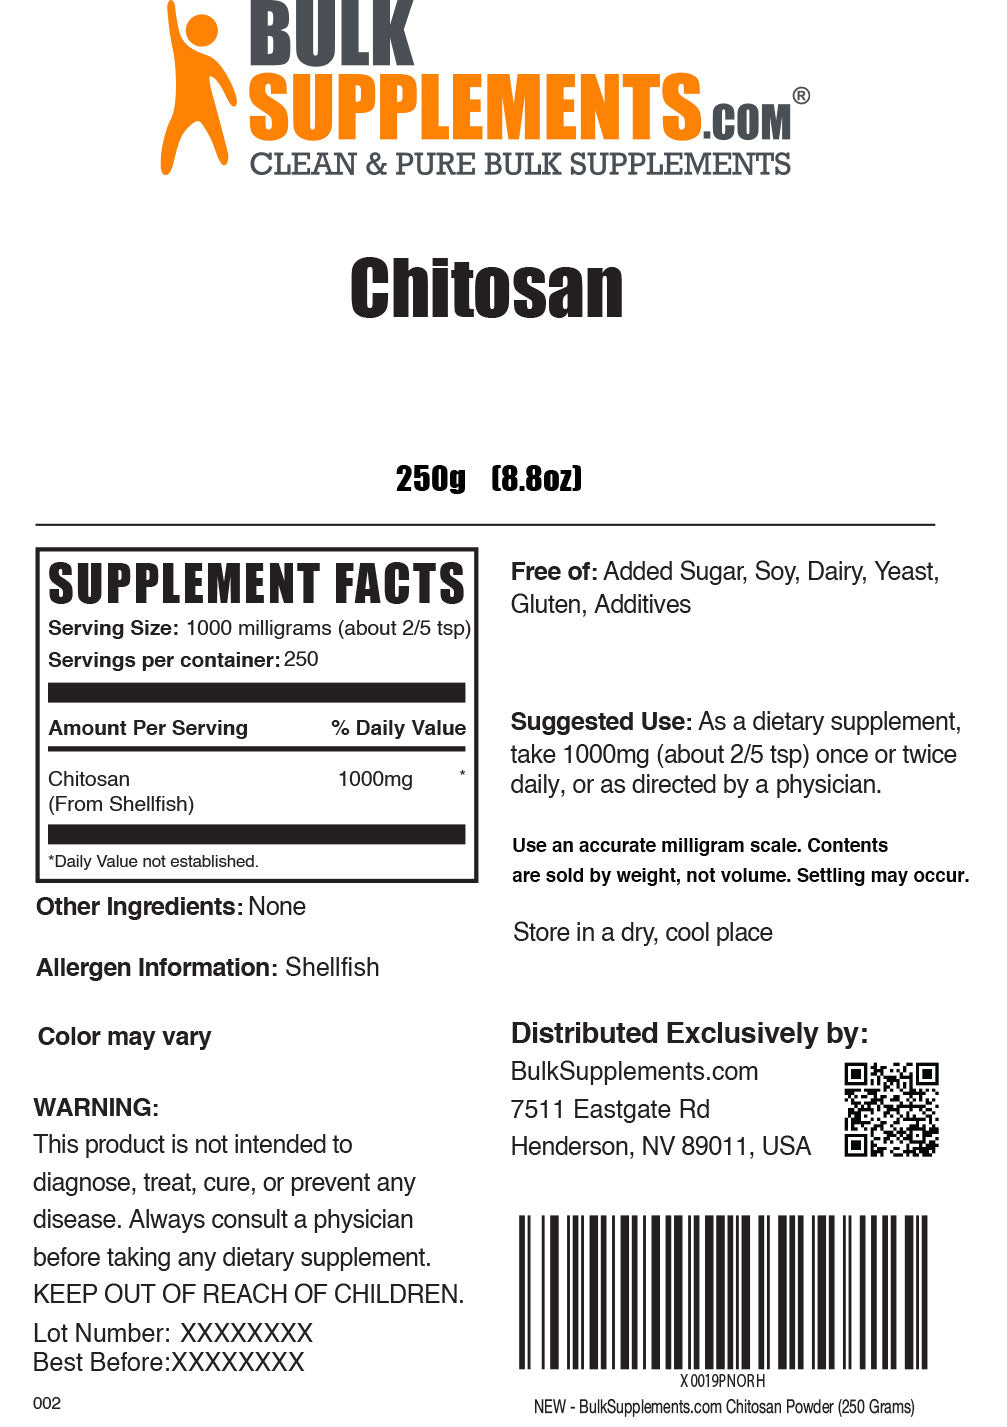 Chitosan Powder 250g Label